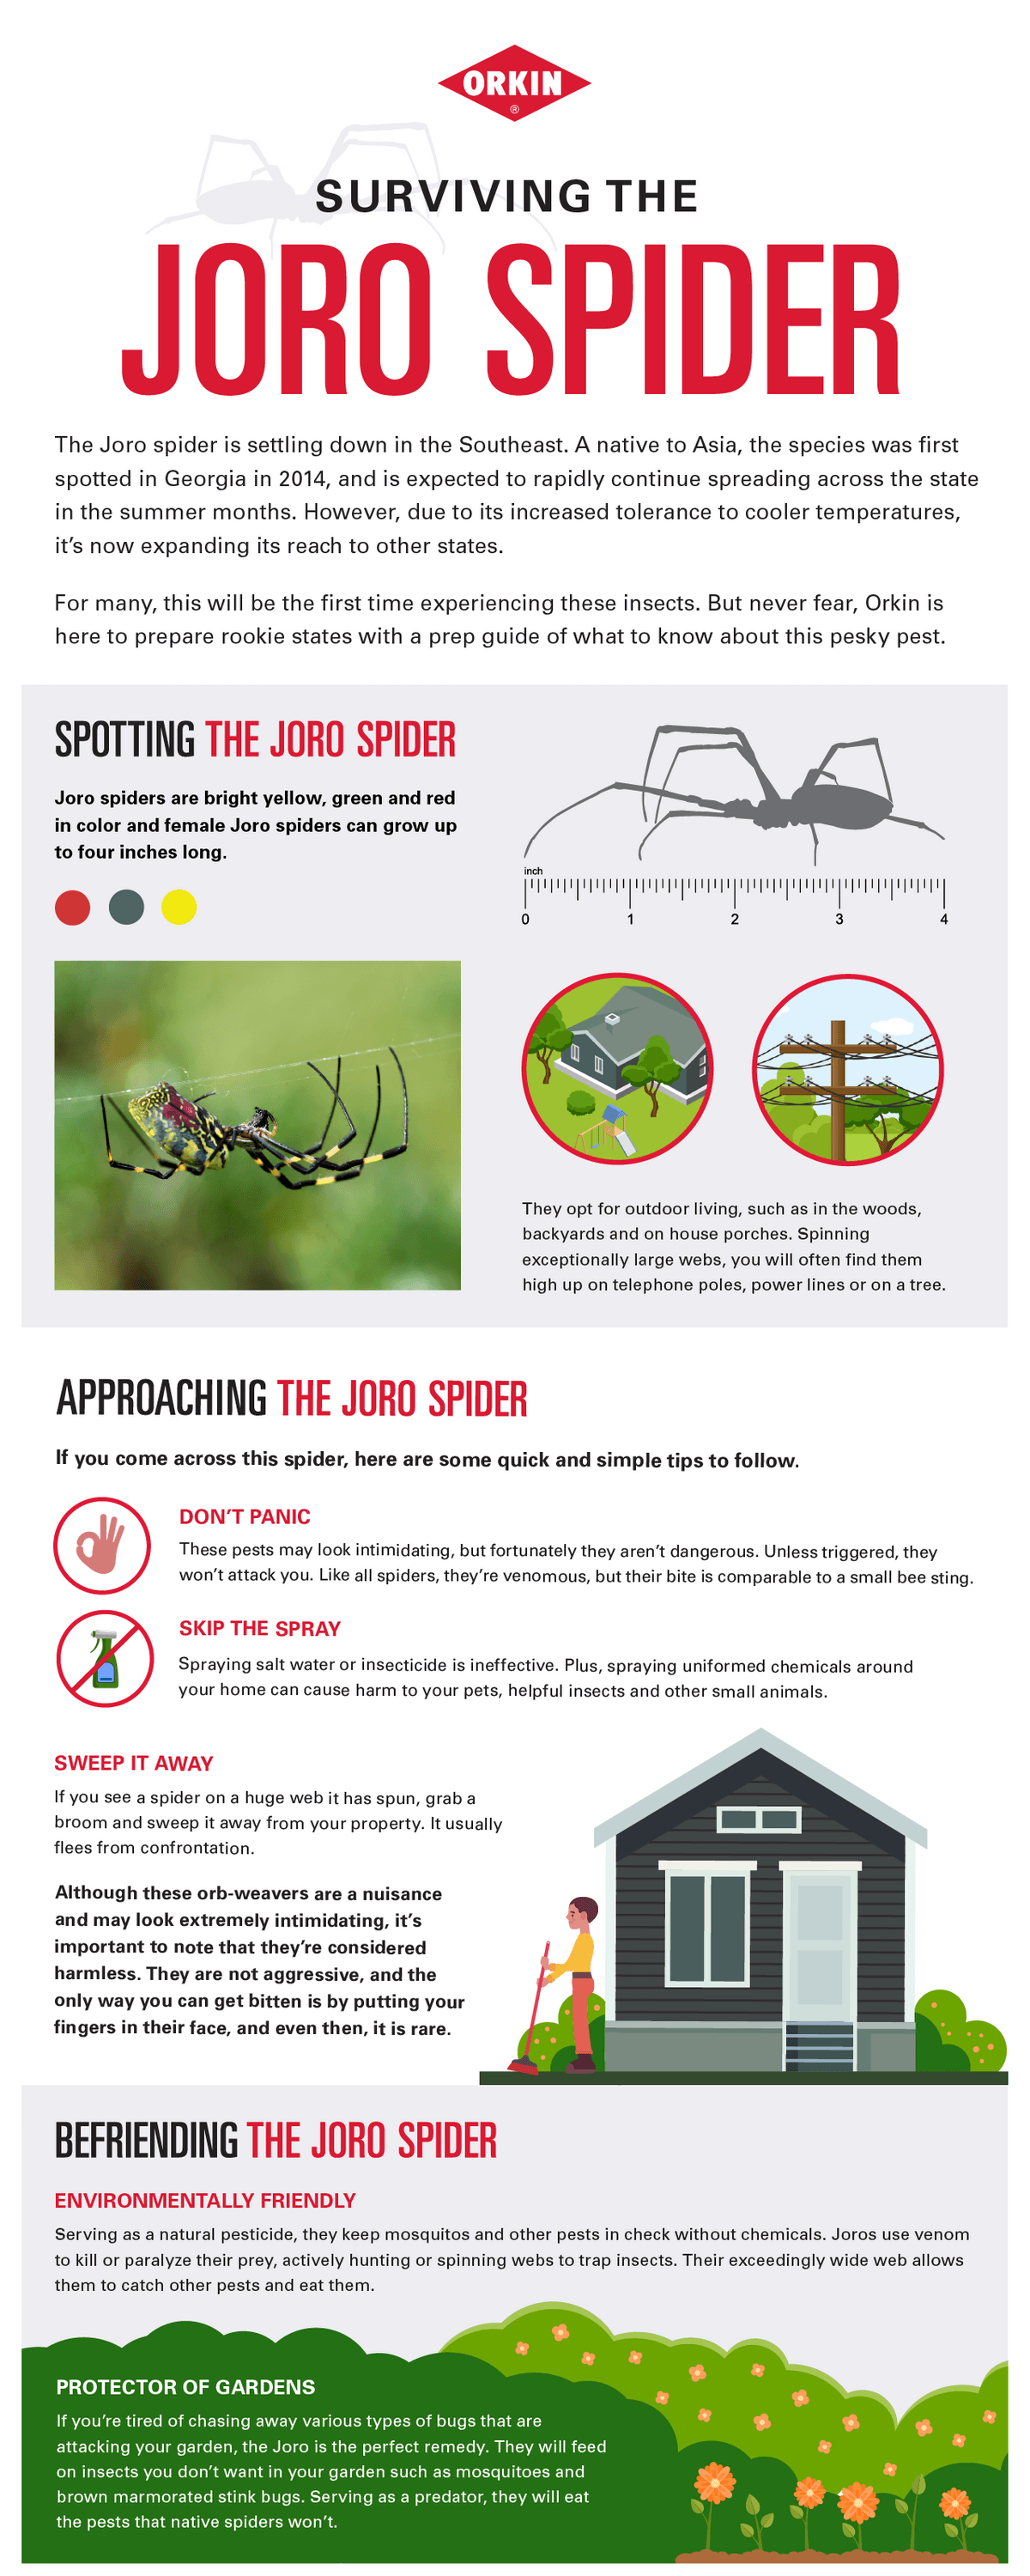 What is a joro spider